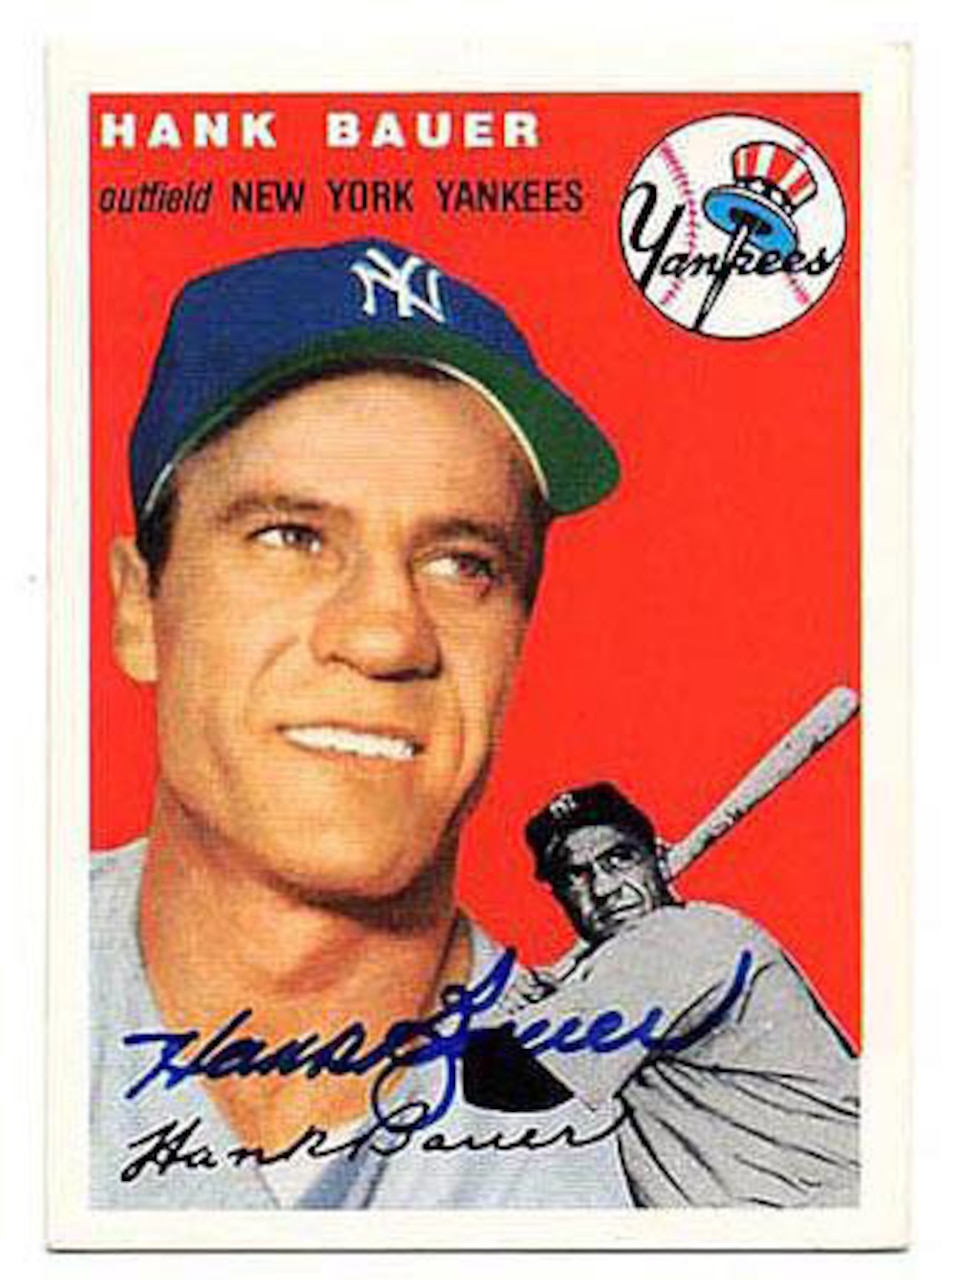 A photo on a baseball card shows a baseball player holding a bat.